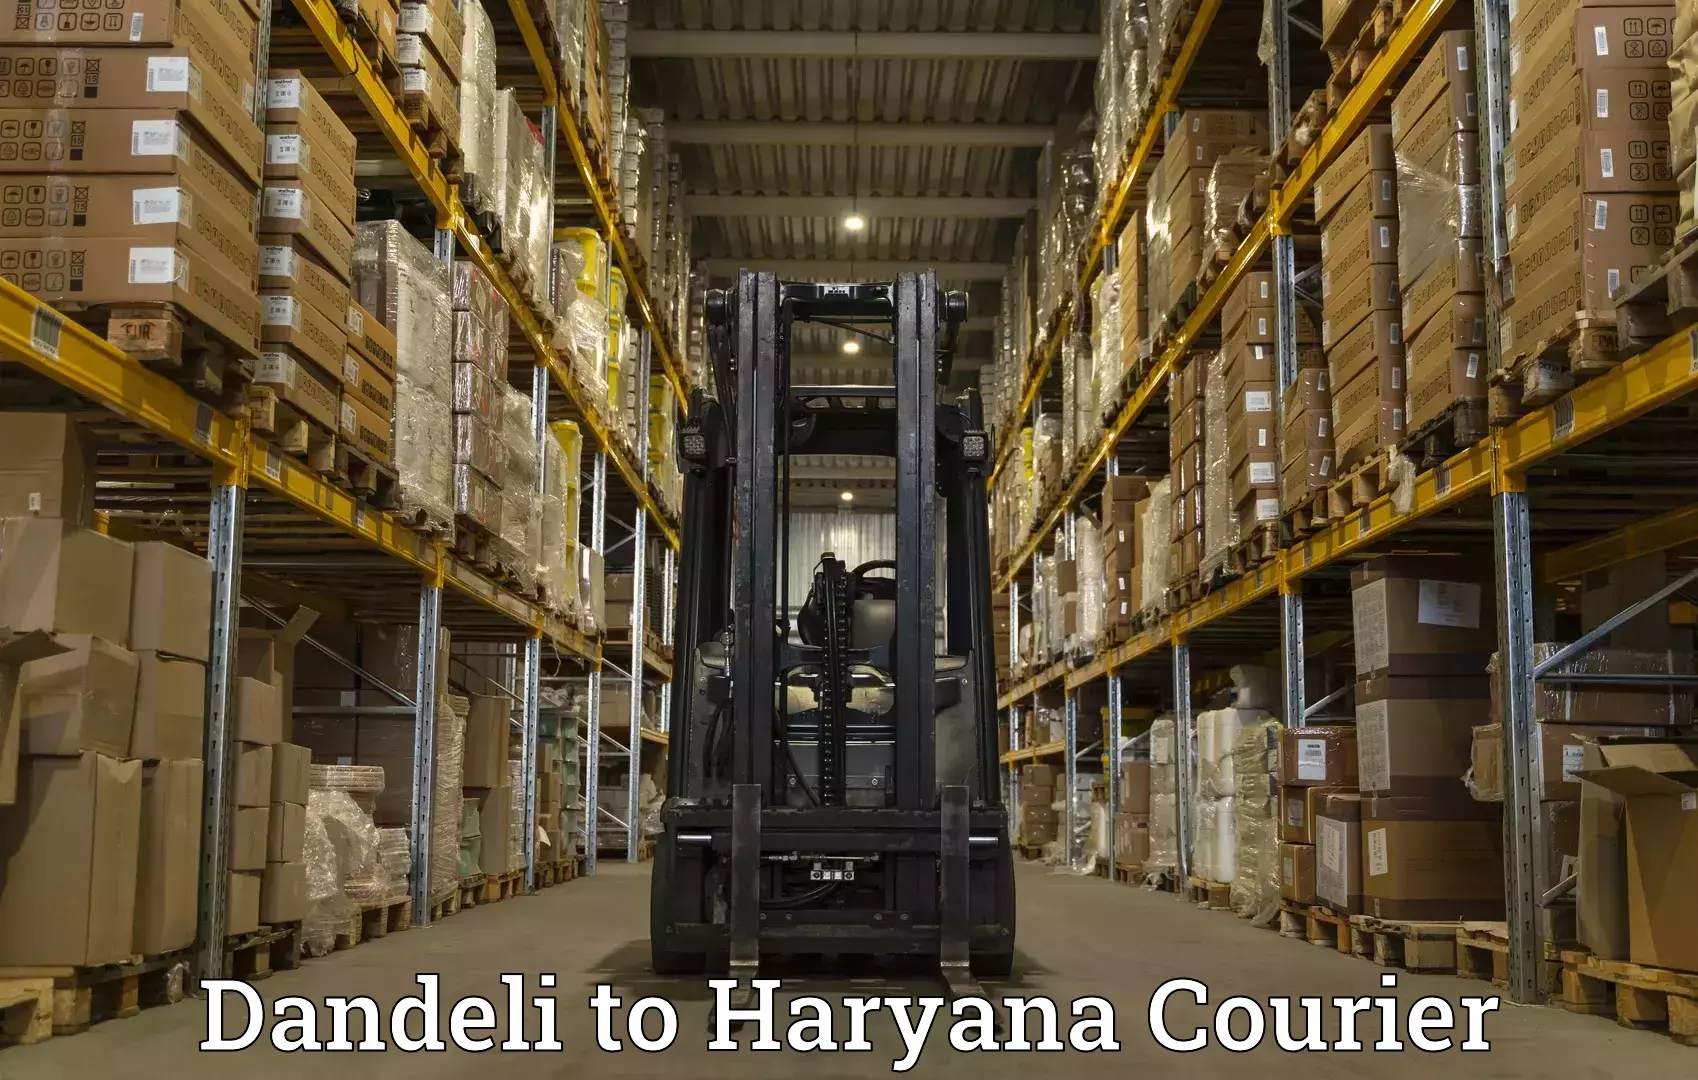 Global logistics network Dandeli to Hansi